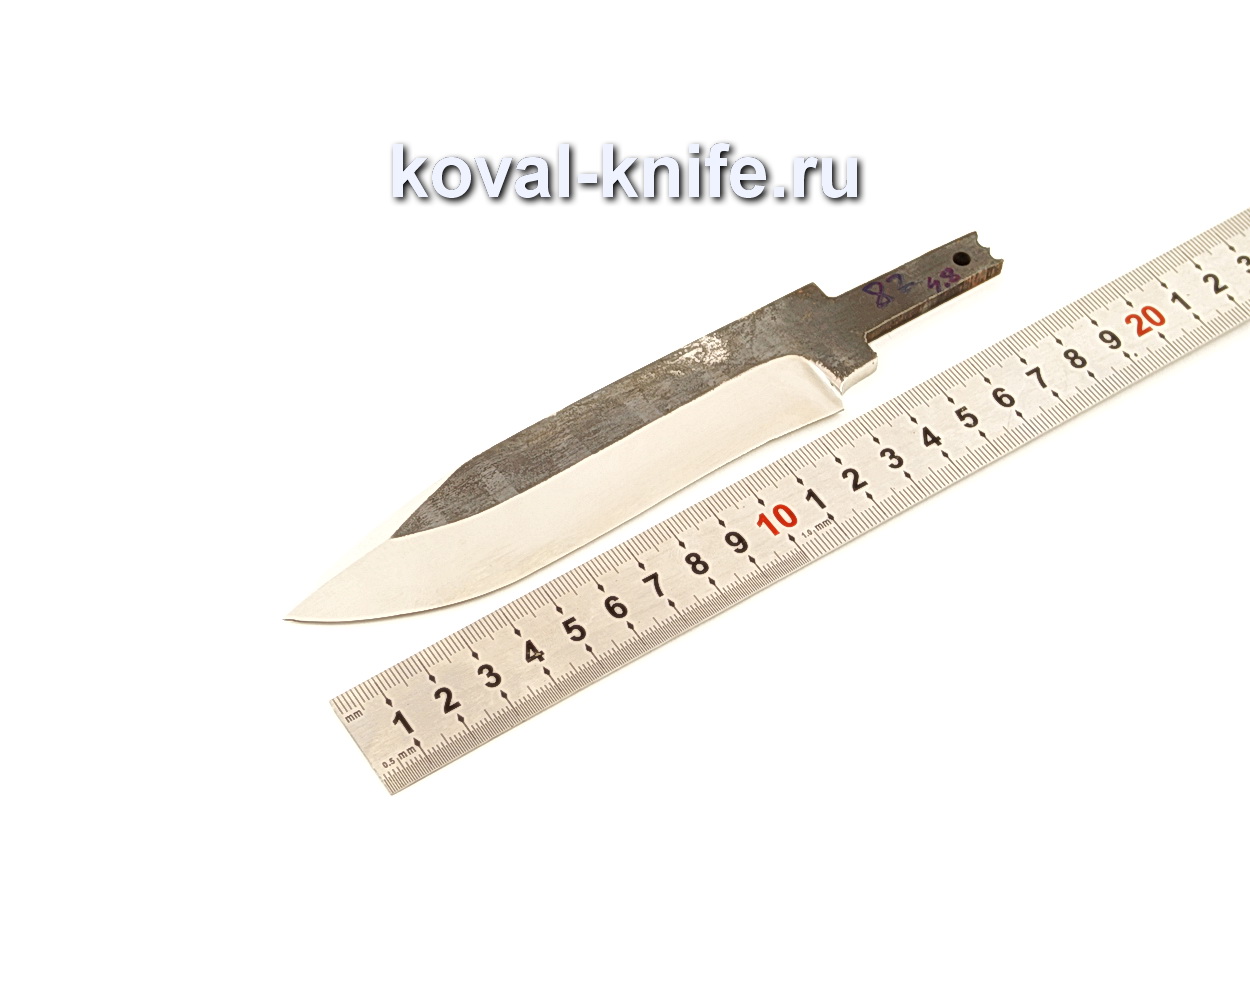 Клинок для ножа из кованой 110Х18 МШД N82